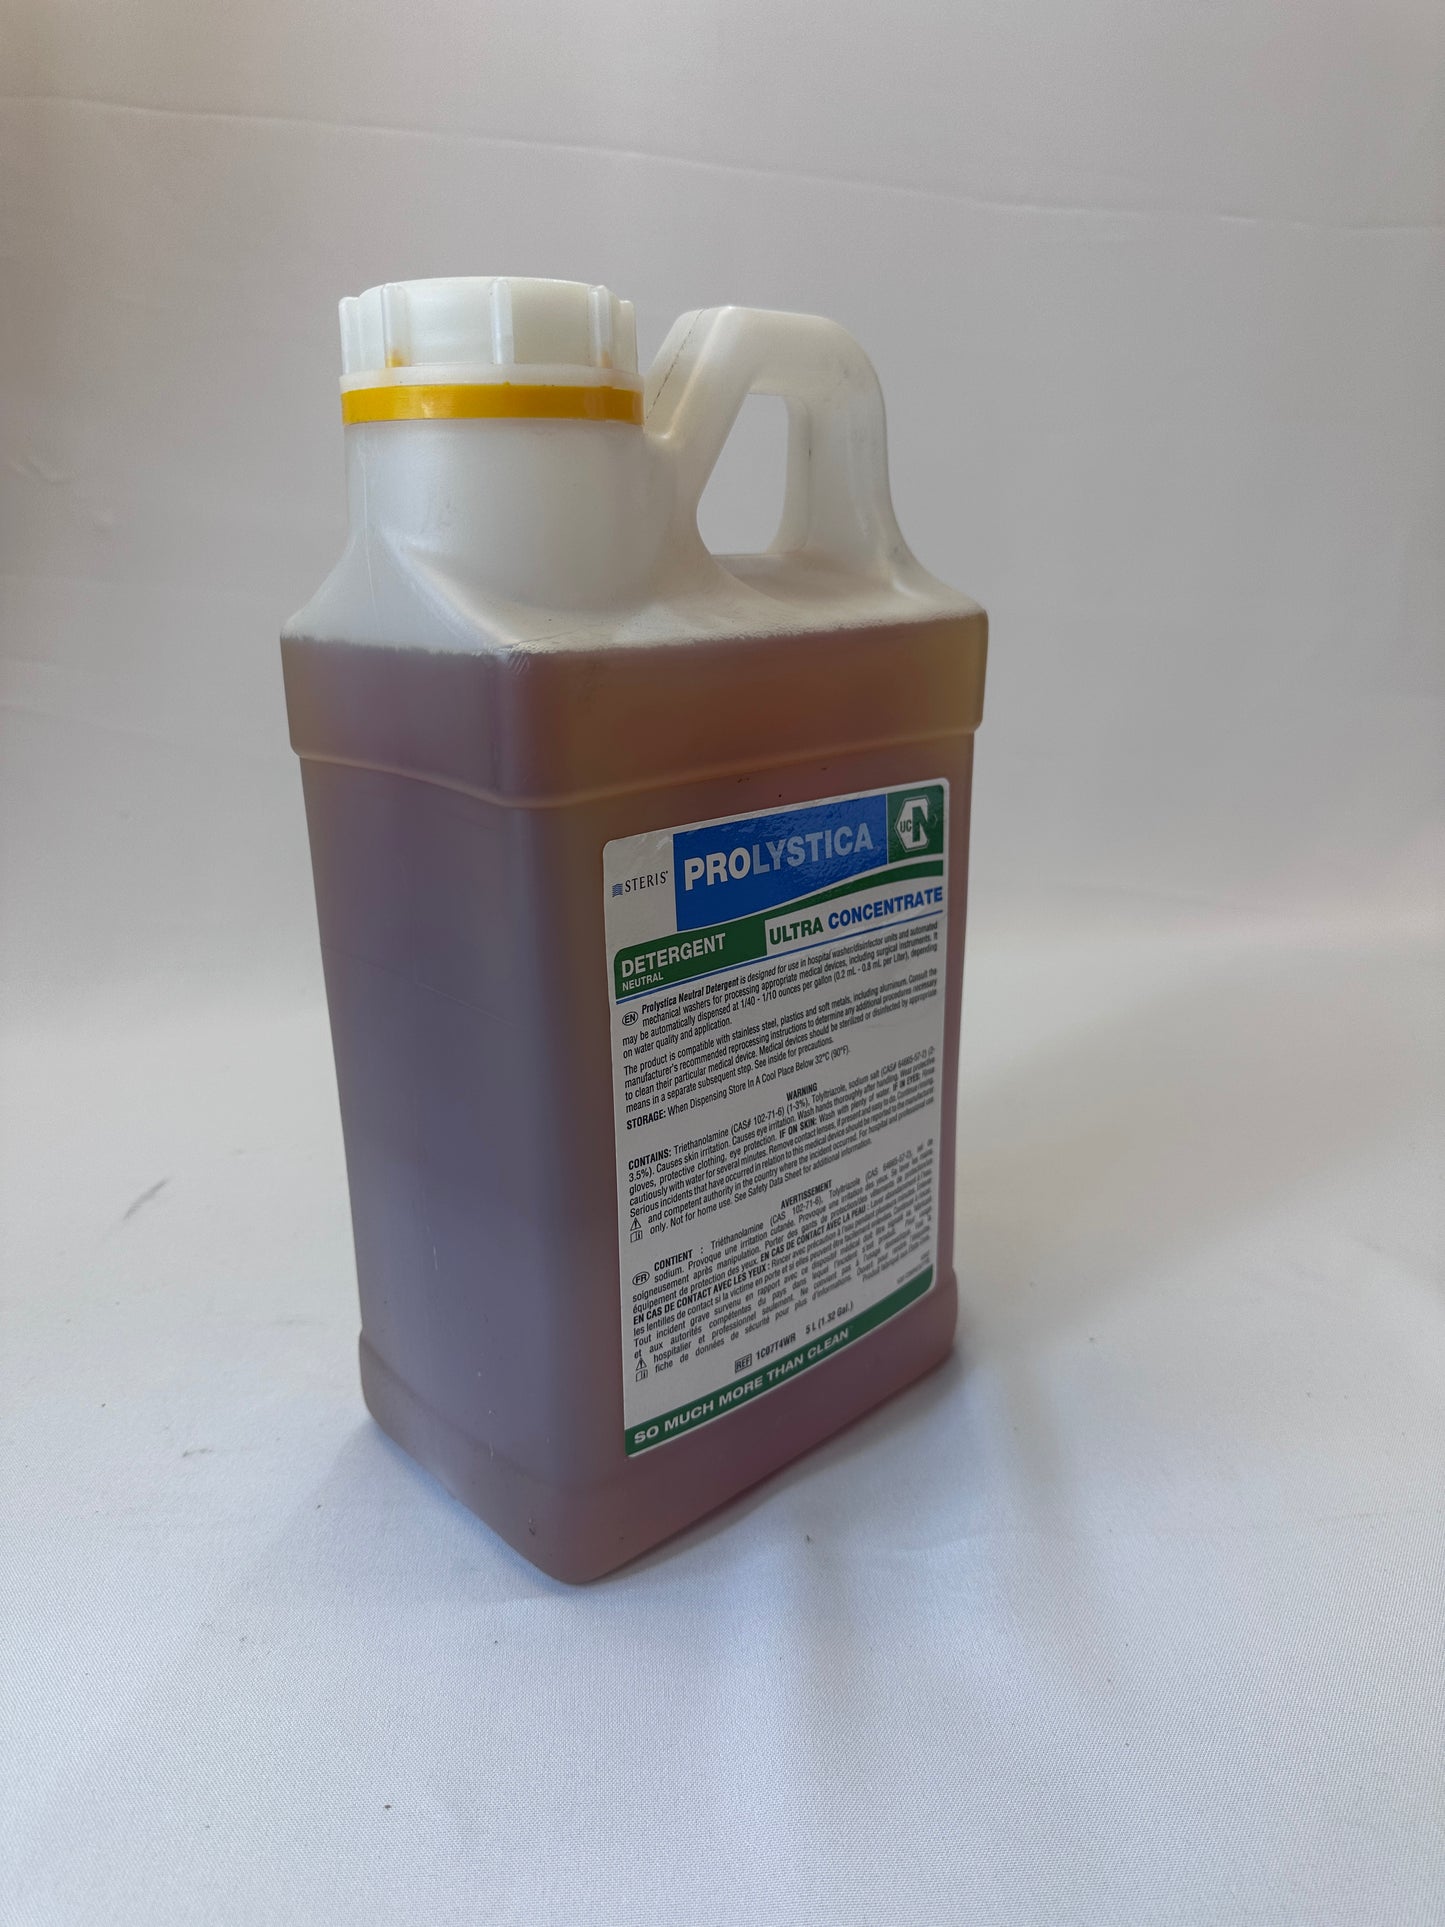 Prolystica™ Ultra Concentrate Neutral Detergent, 5 Liter, 1.32 Gallon